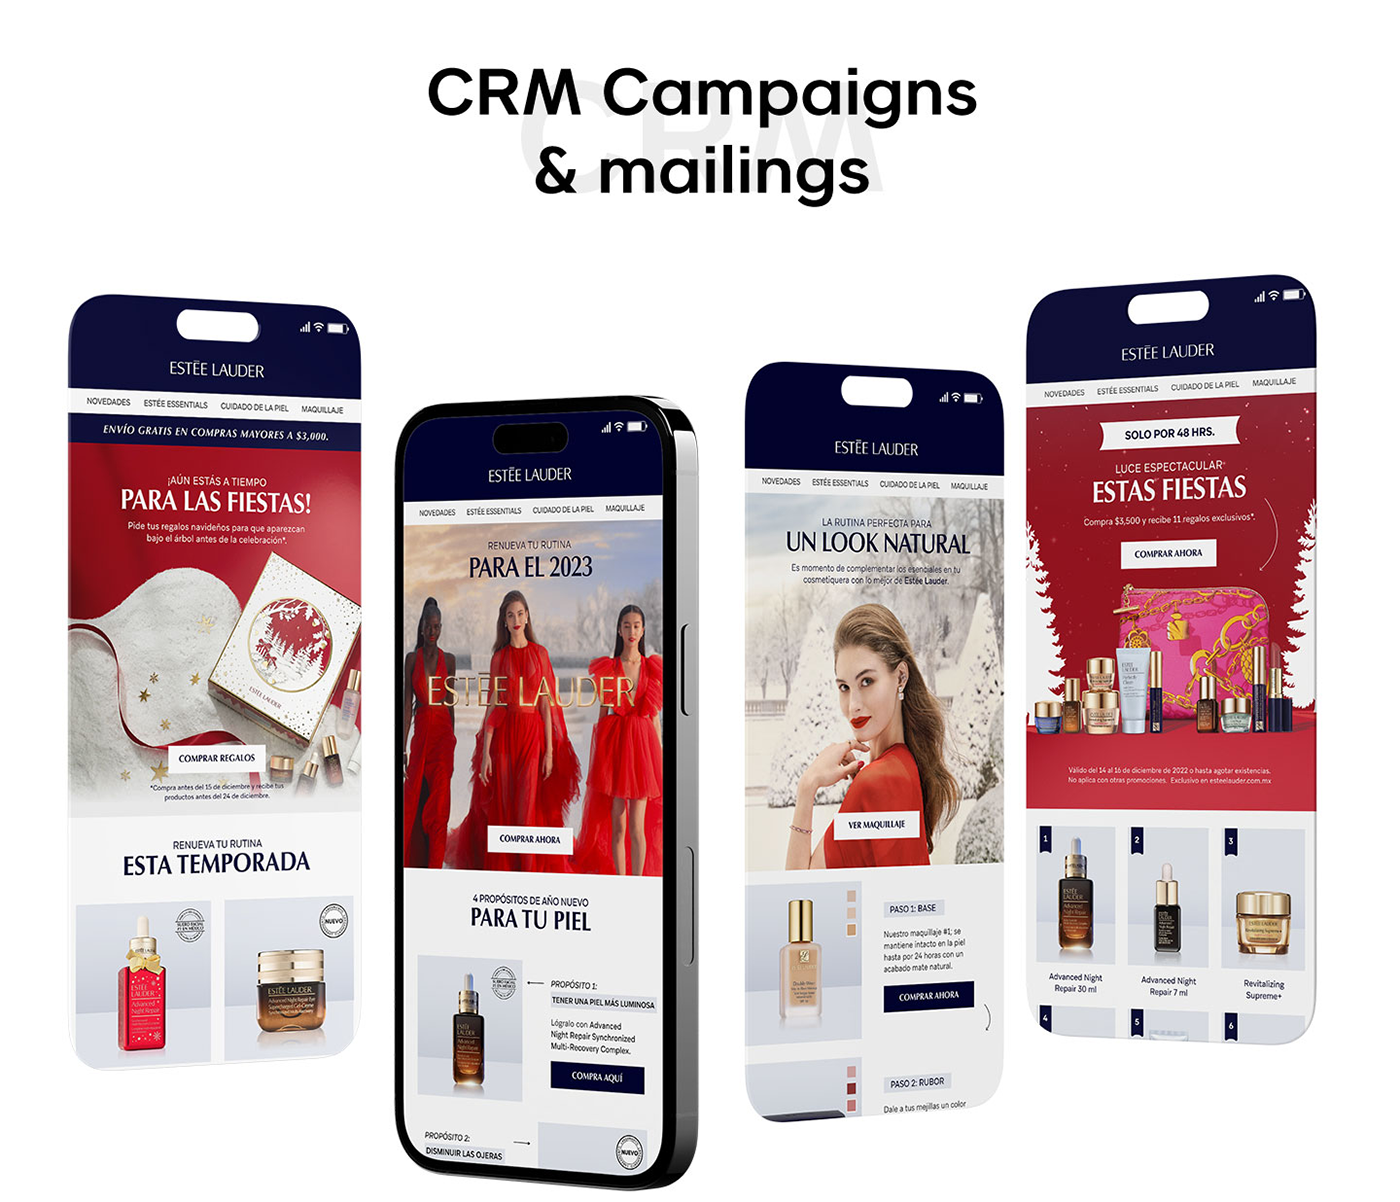 ads campaign CRM digital marketing mailings paid media Social media post Socialmedia